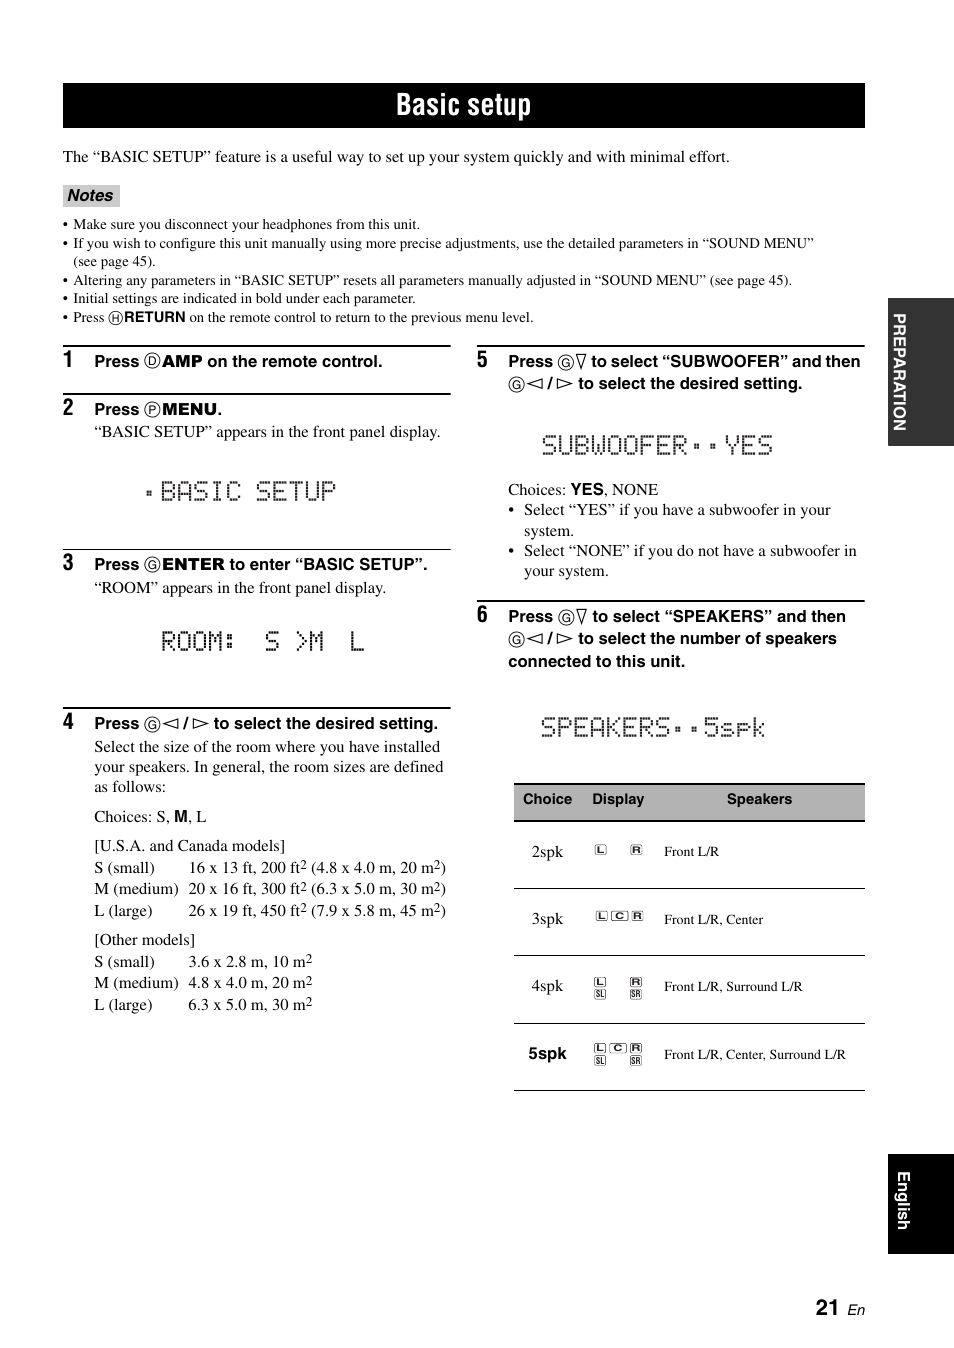 Basic setup, P. 21, Room: s >m l | Yamaha HTR-6030 User Manual | Page 25 /  78 | Original mode